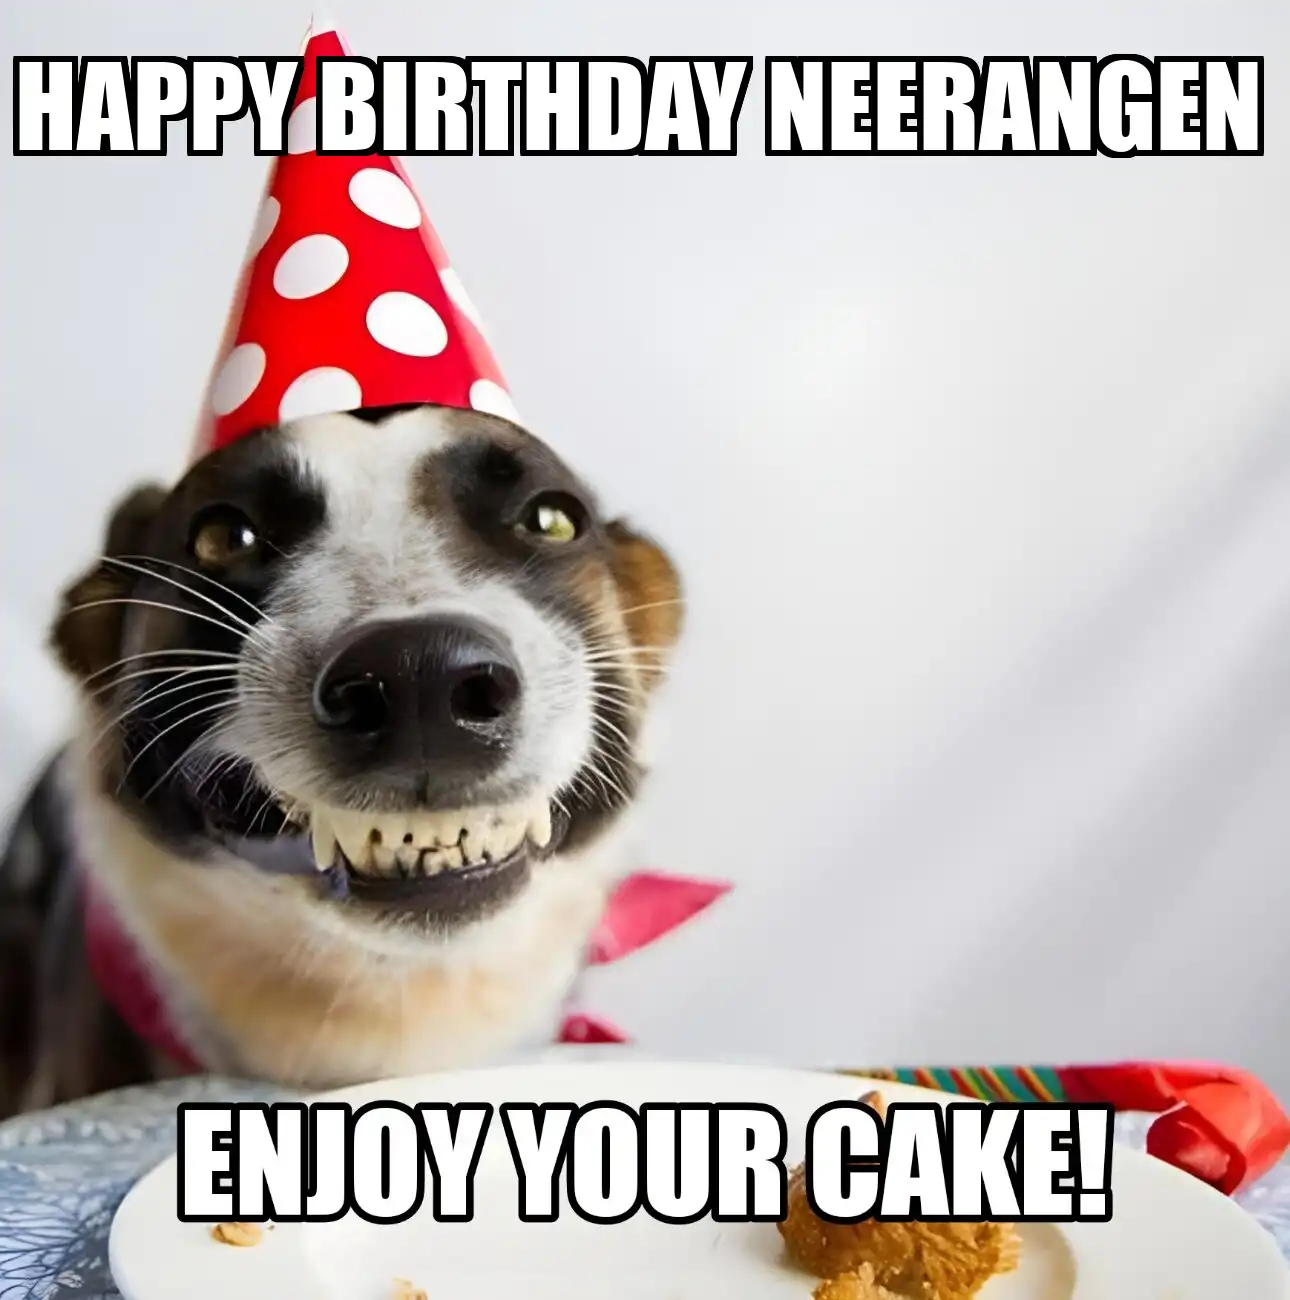 Happy Birthday Neerangen Enjoy Your Cake Dog Meme